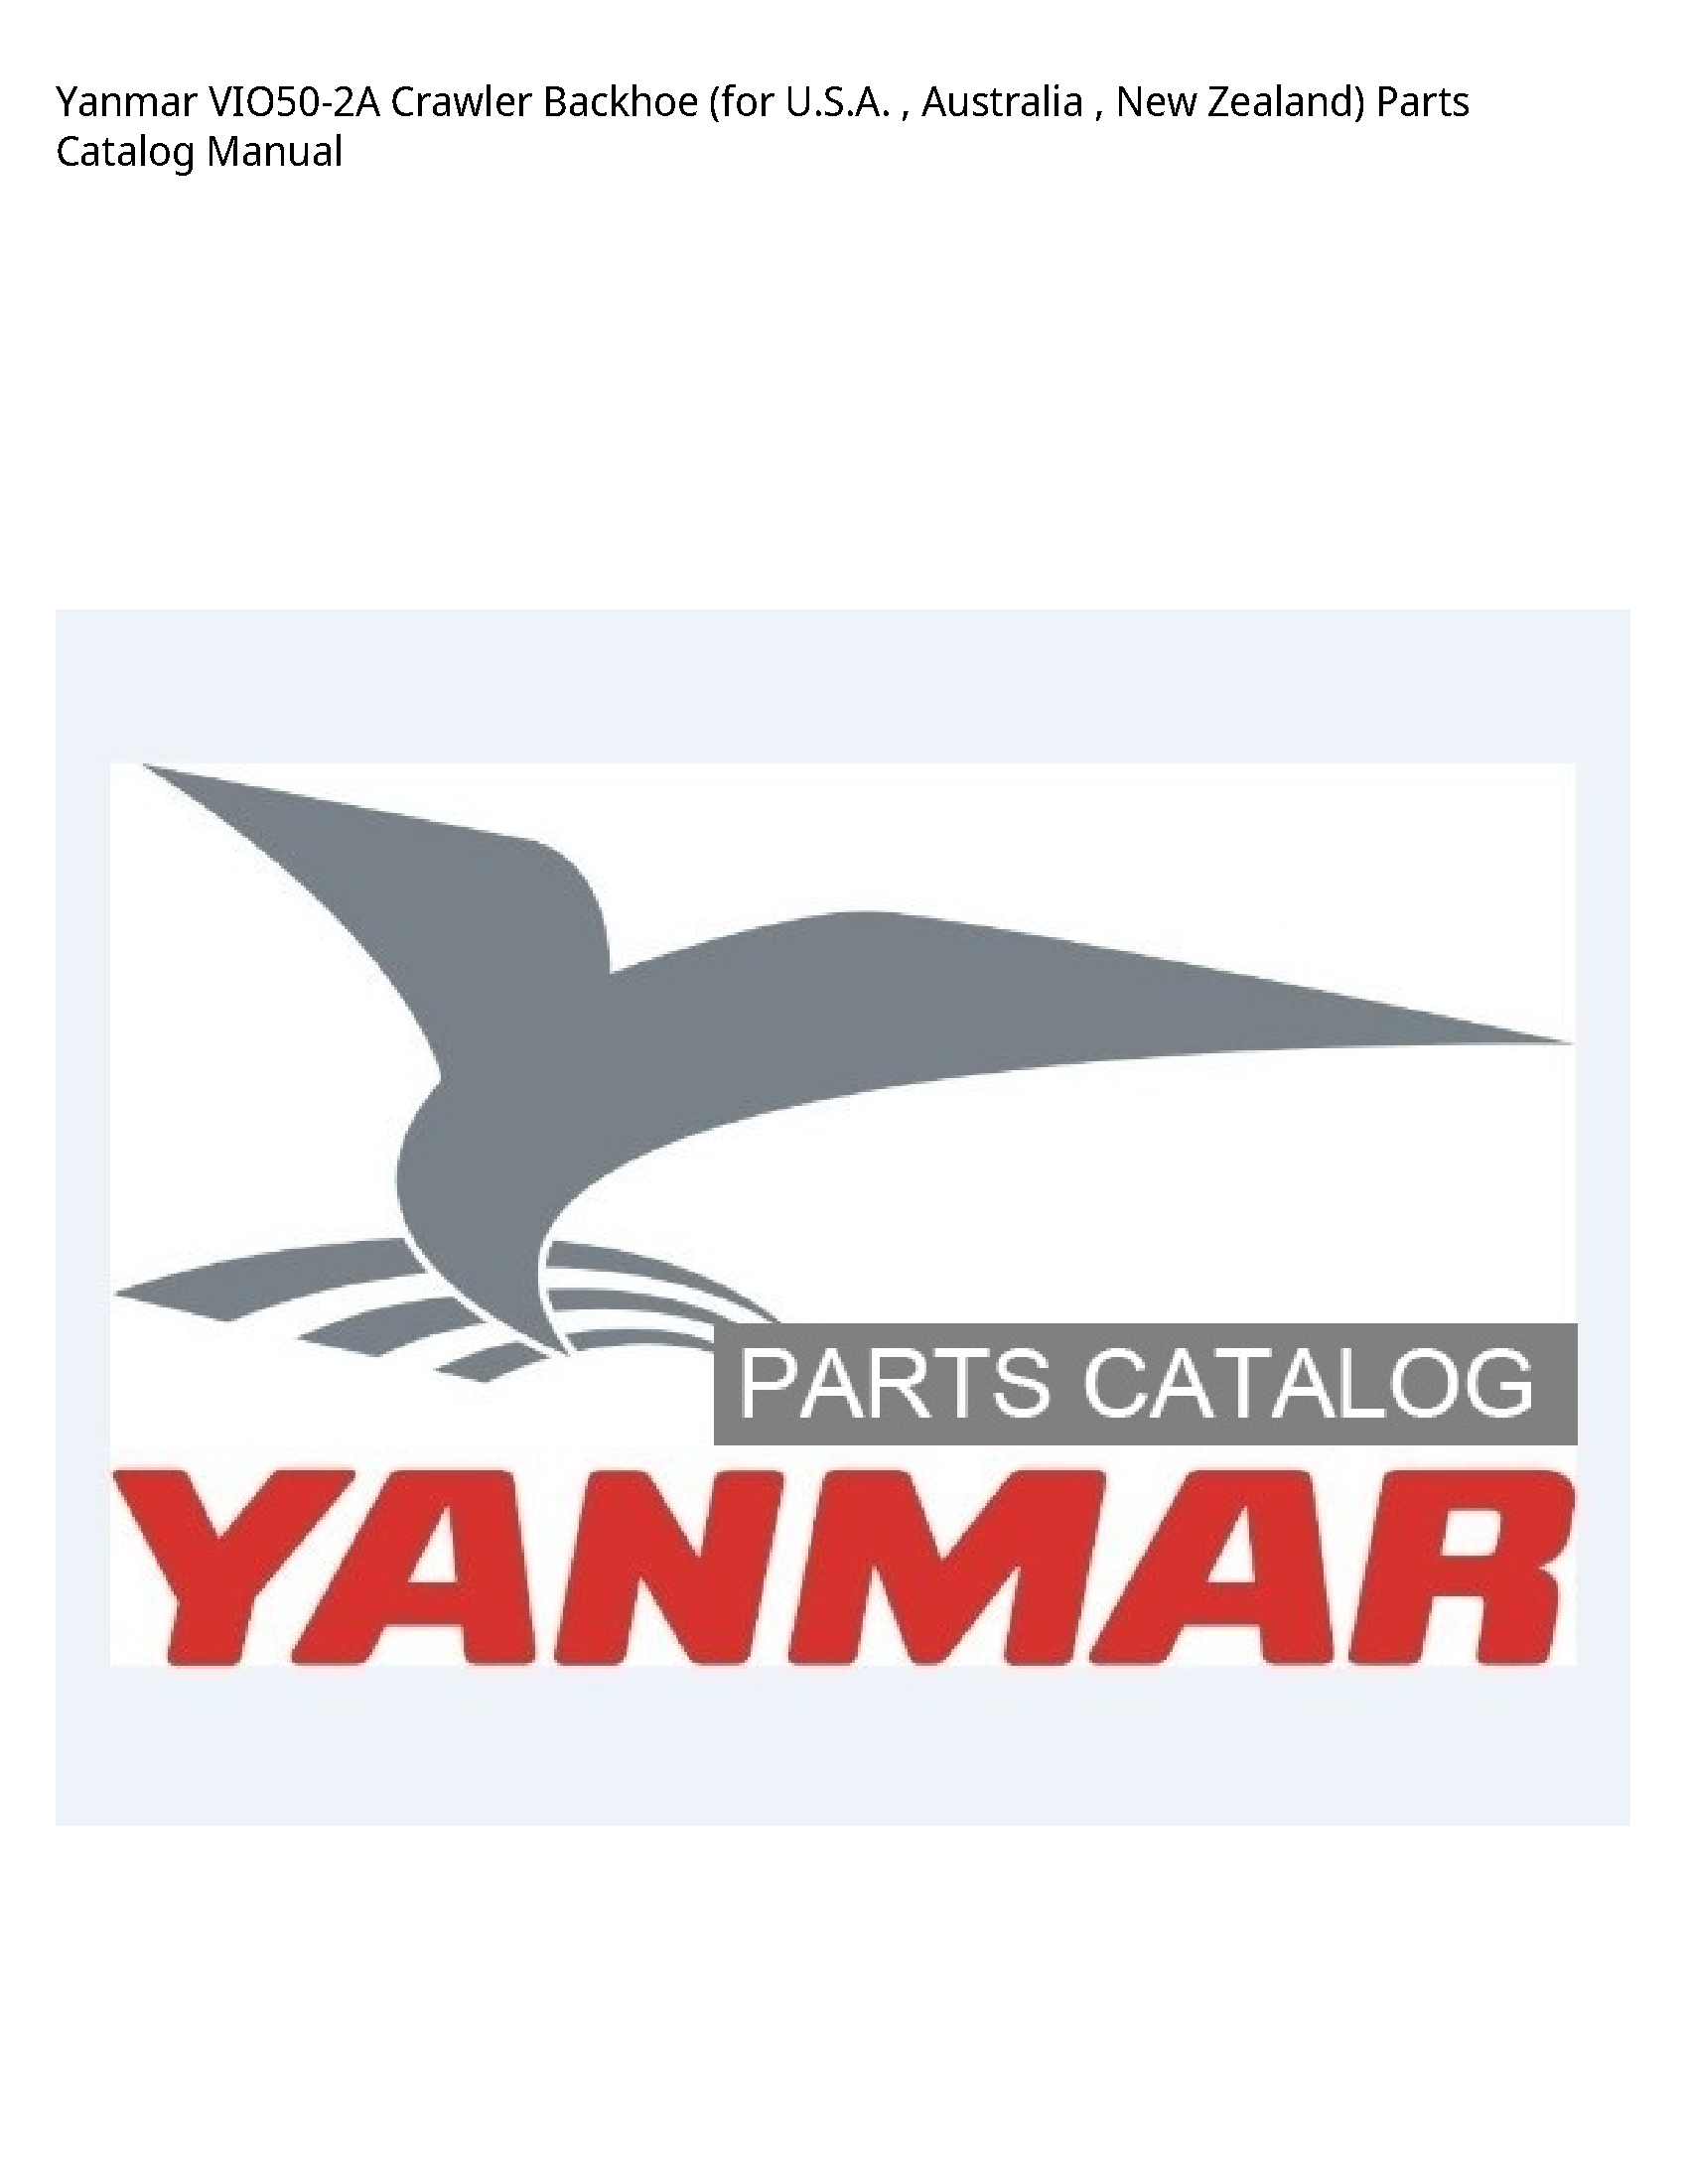 Yanmar VIO50-2A Crawler Backhoe (for U.S.A. Australia New Zealand) Parts Catalog manual